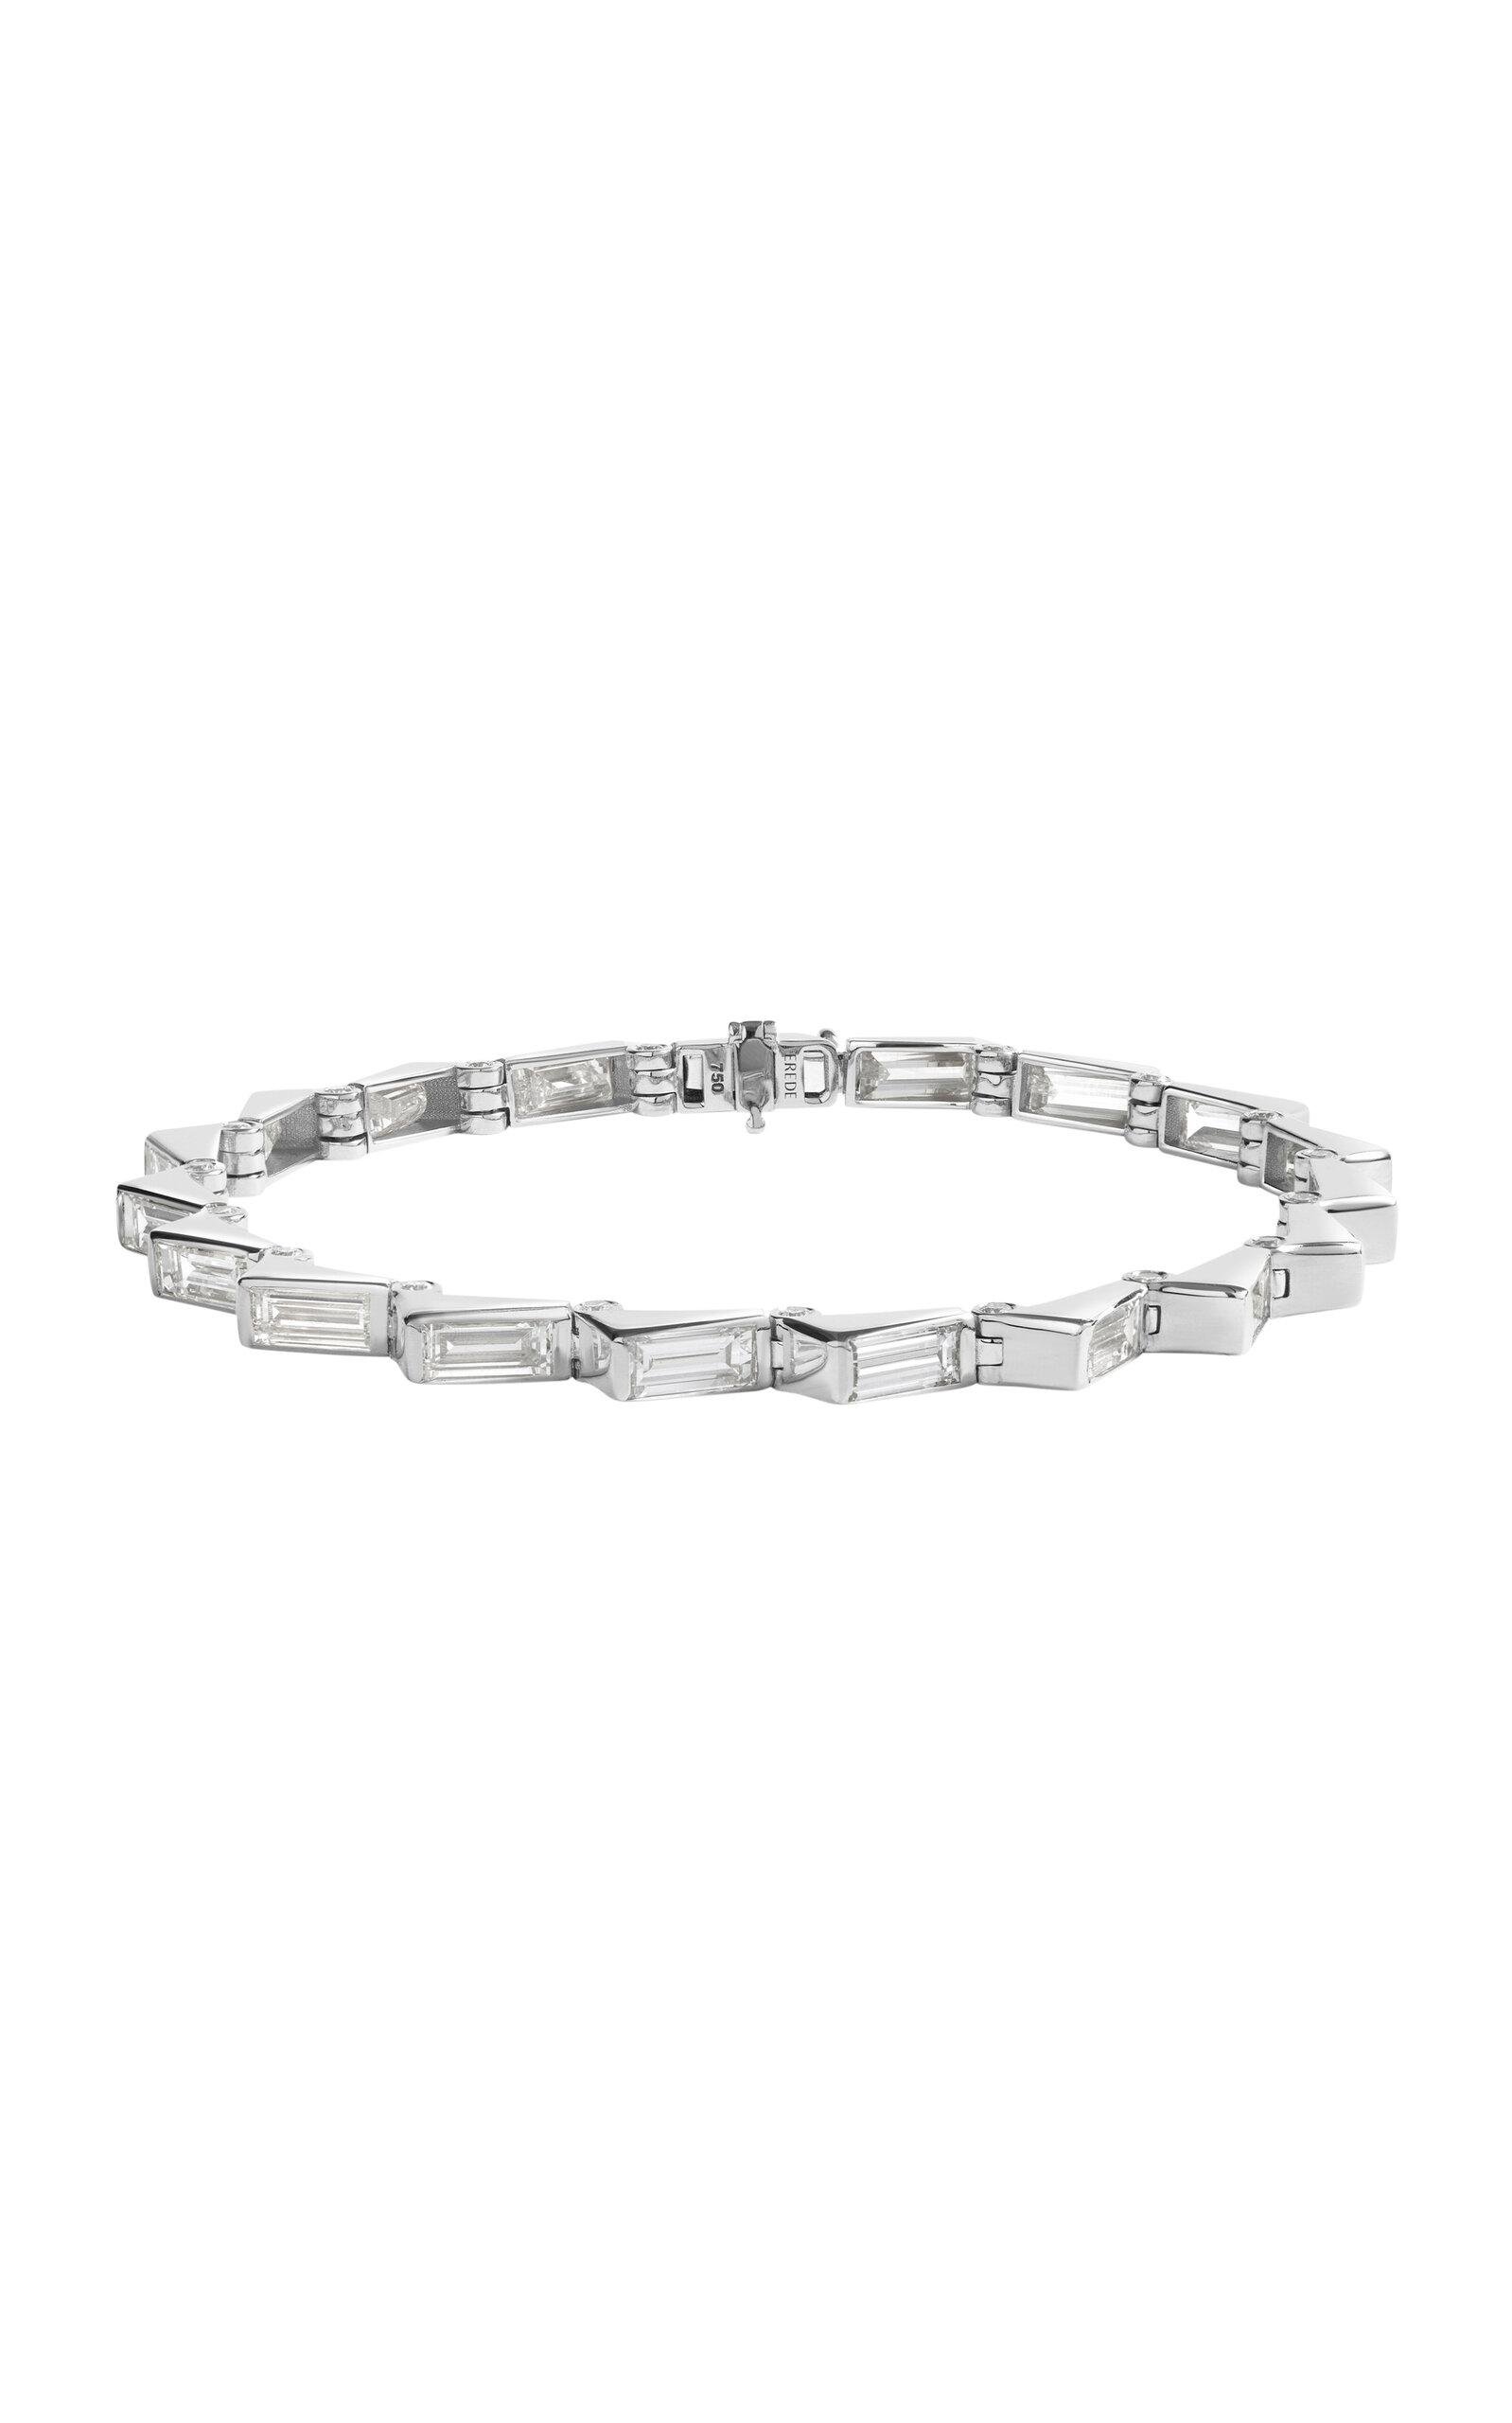 Erede - 18k White Gold Diamond Bracelet - White - OS - Only At Moda Operandi - Gifts For Her by EREDE